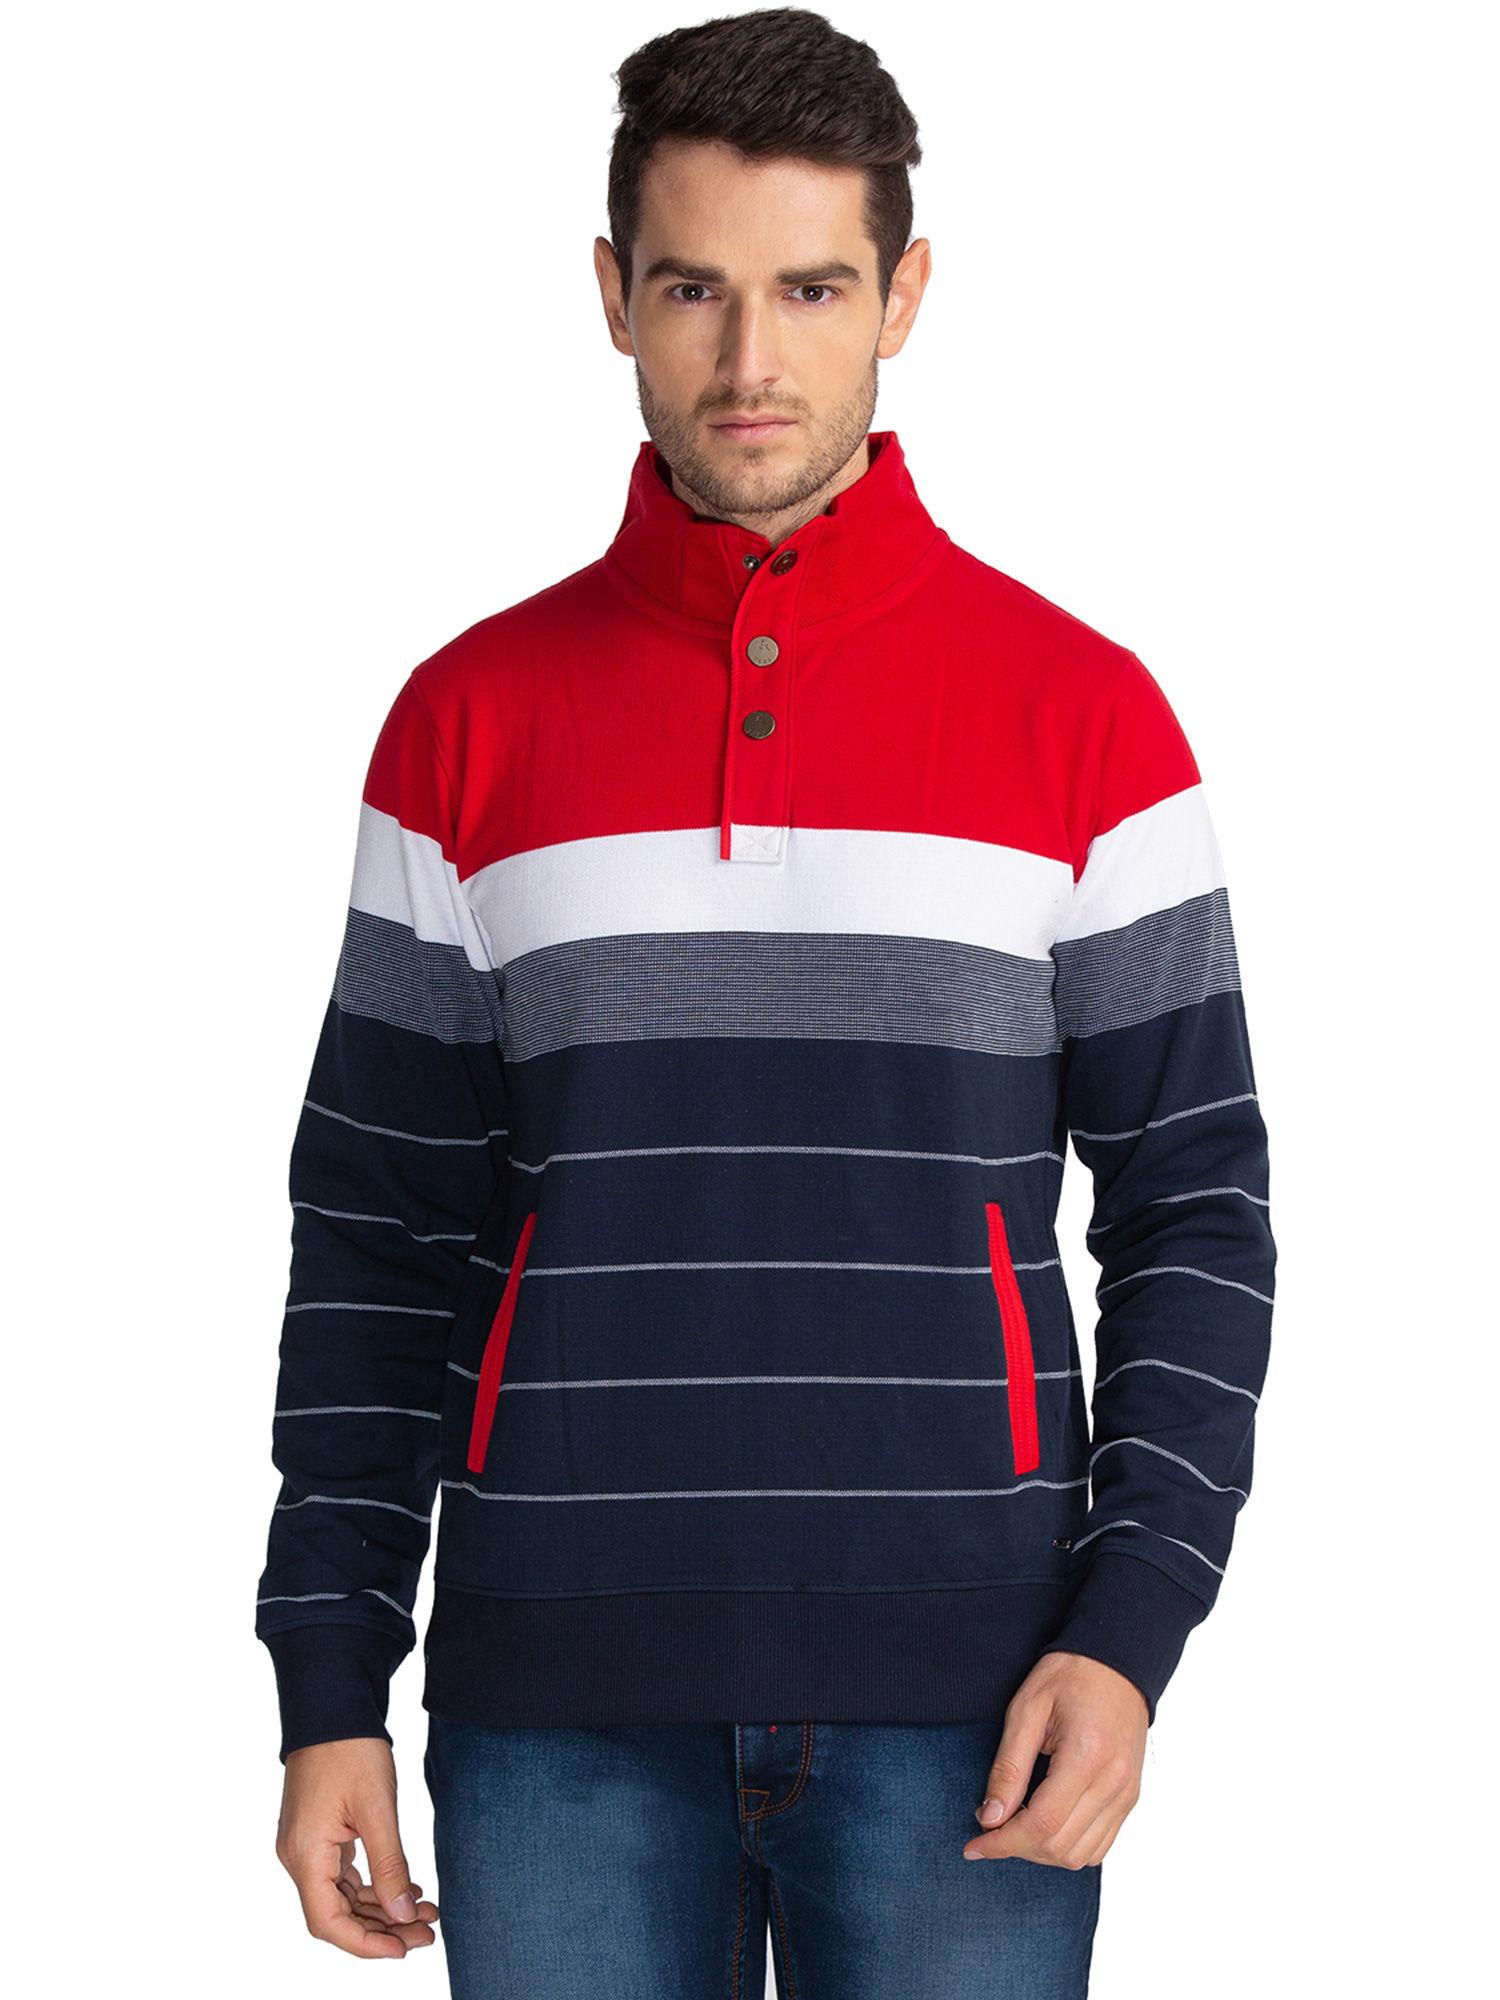 men-medium-red-sweatshirt